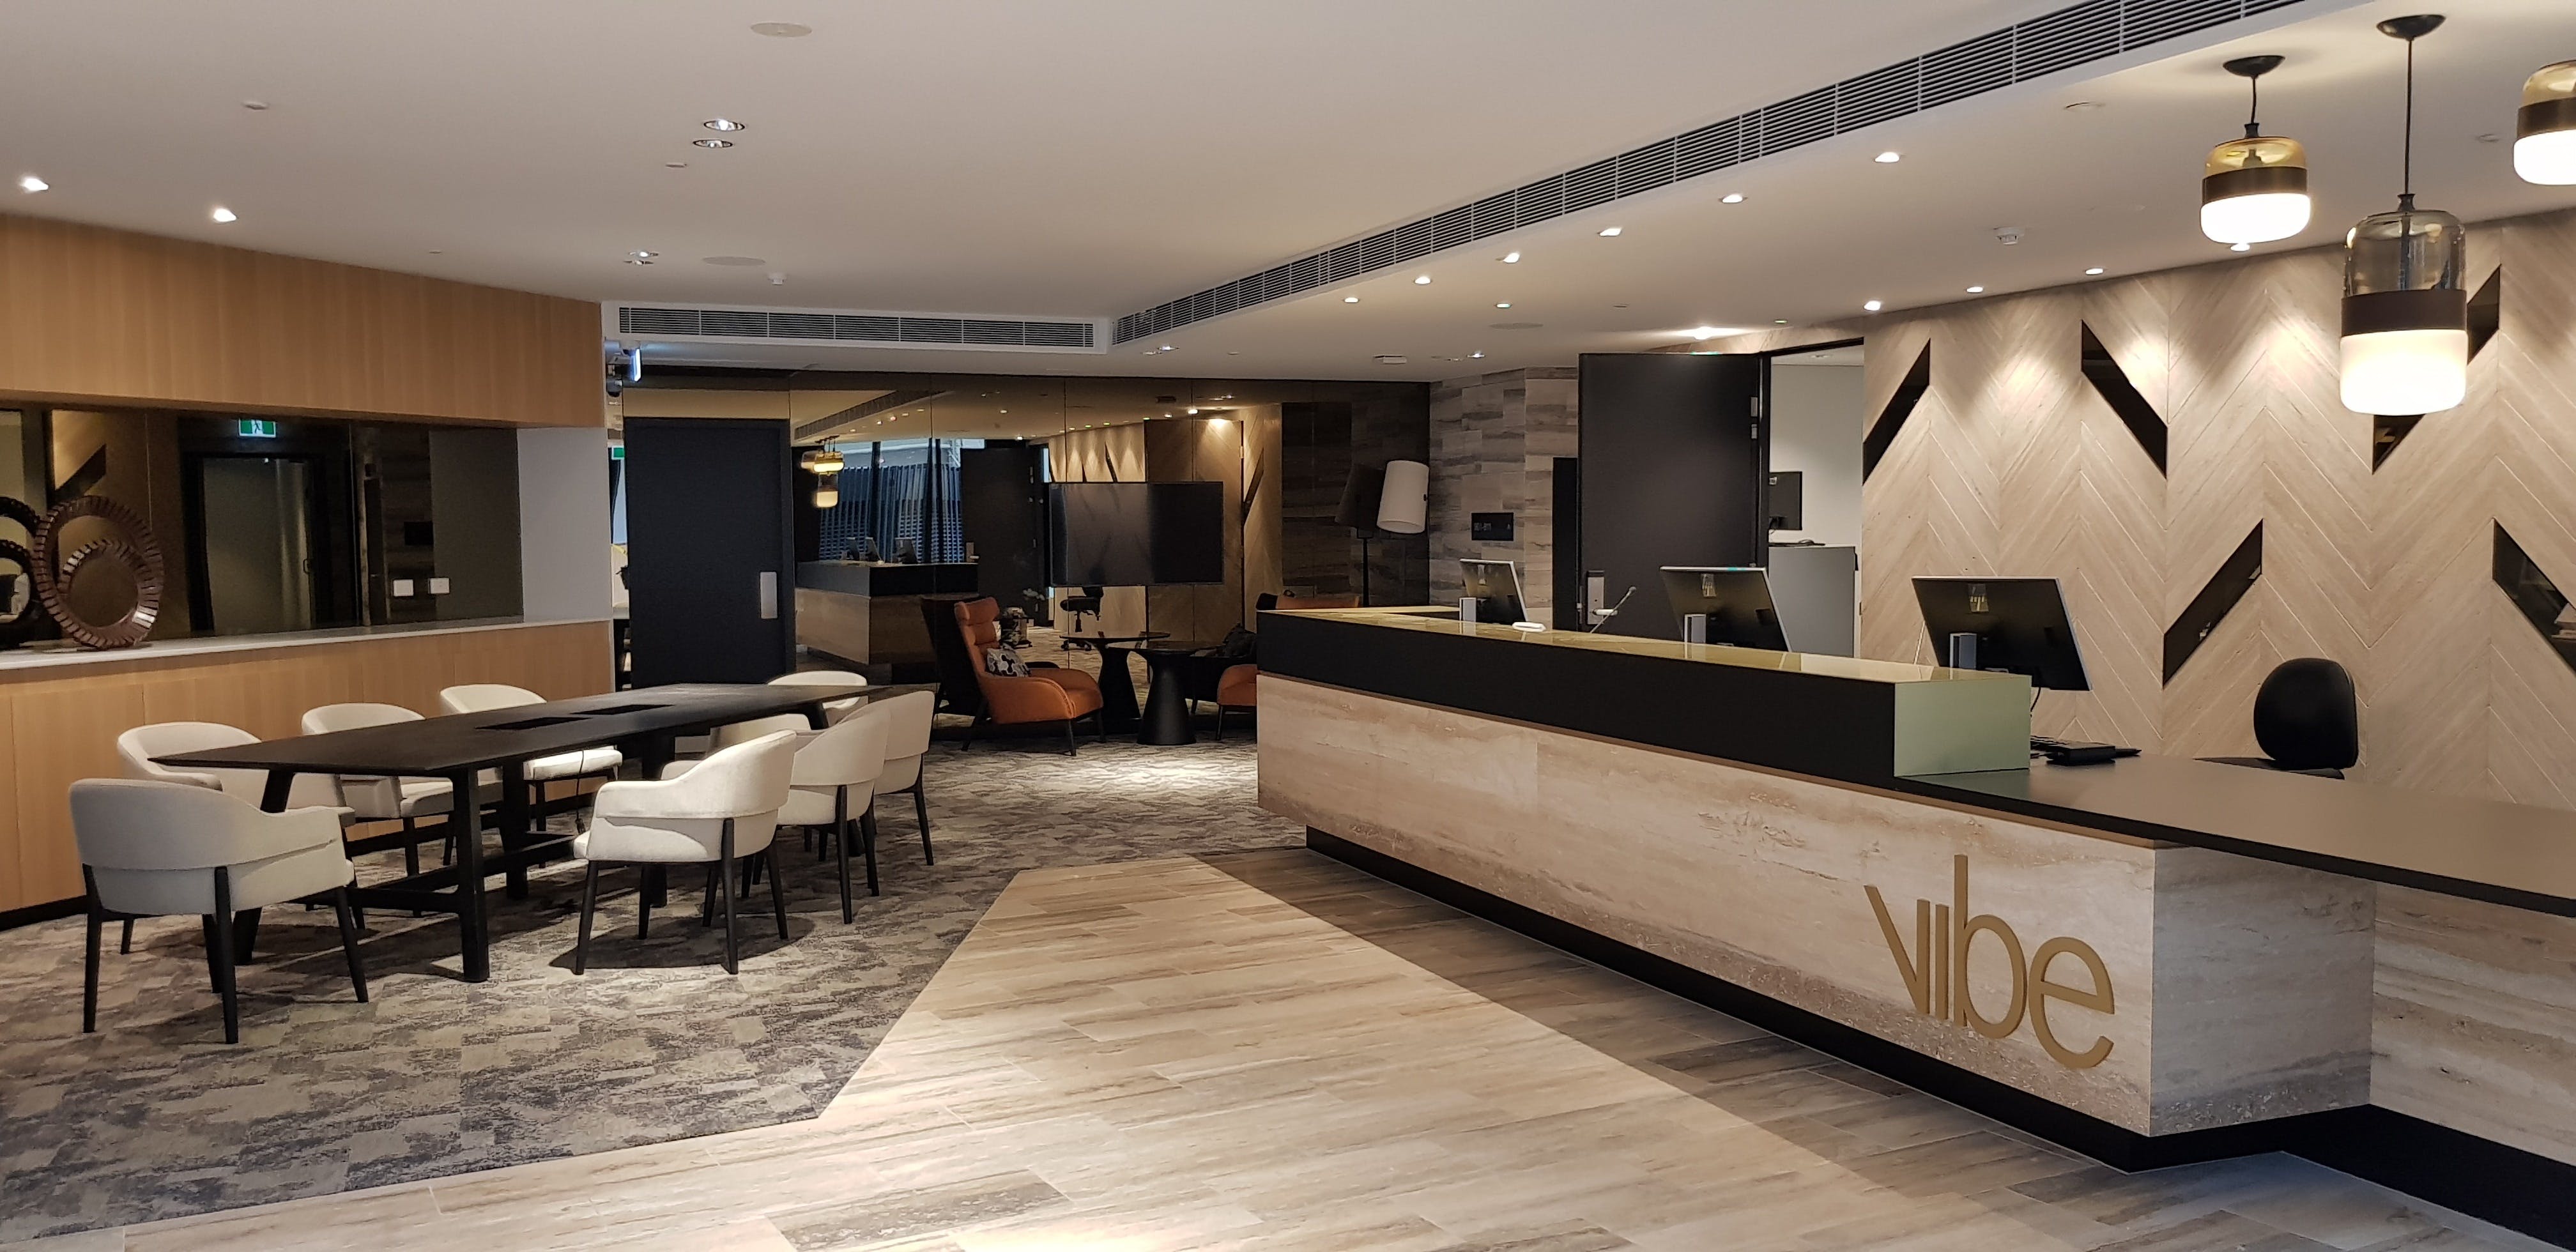 Vibe Hotel North Sydney - Nambucca Heads Accommodation